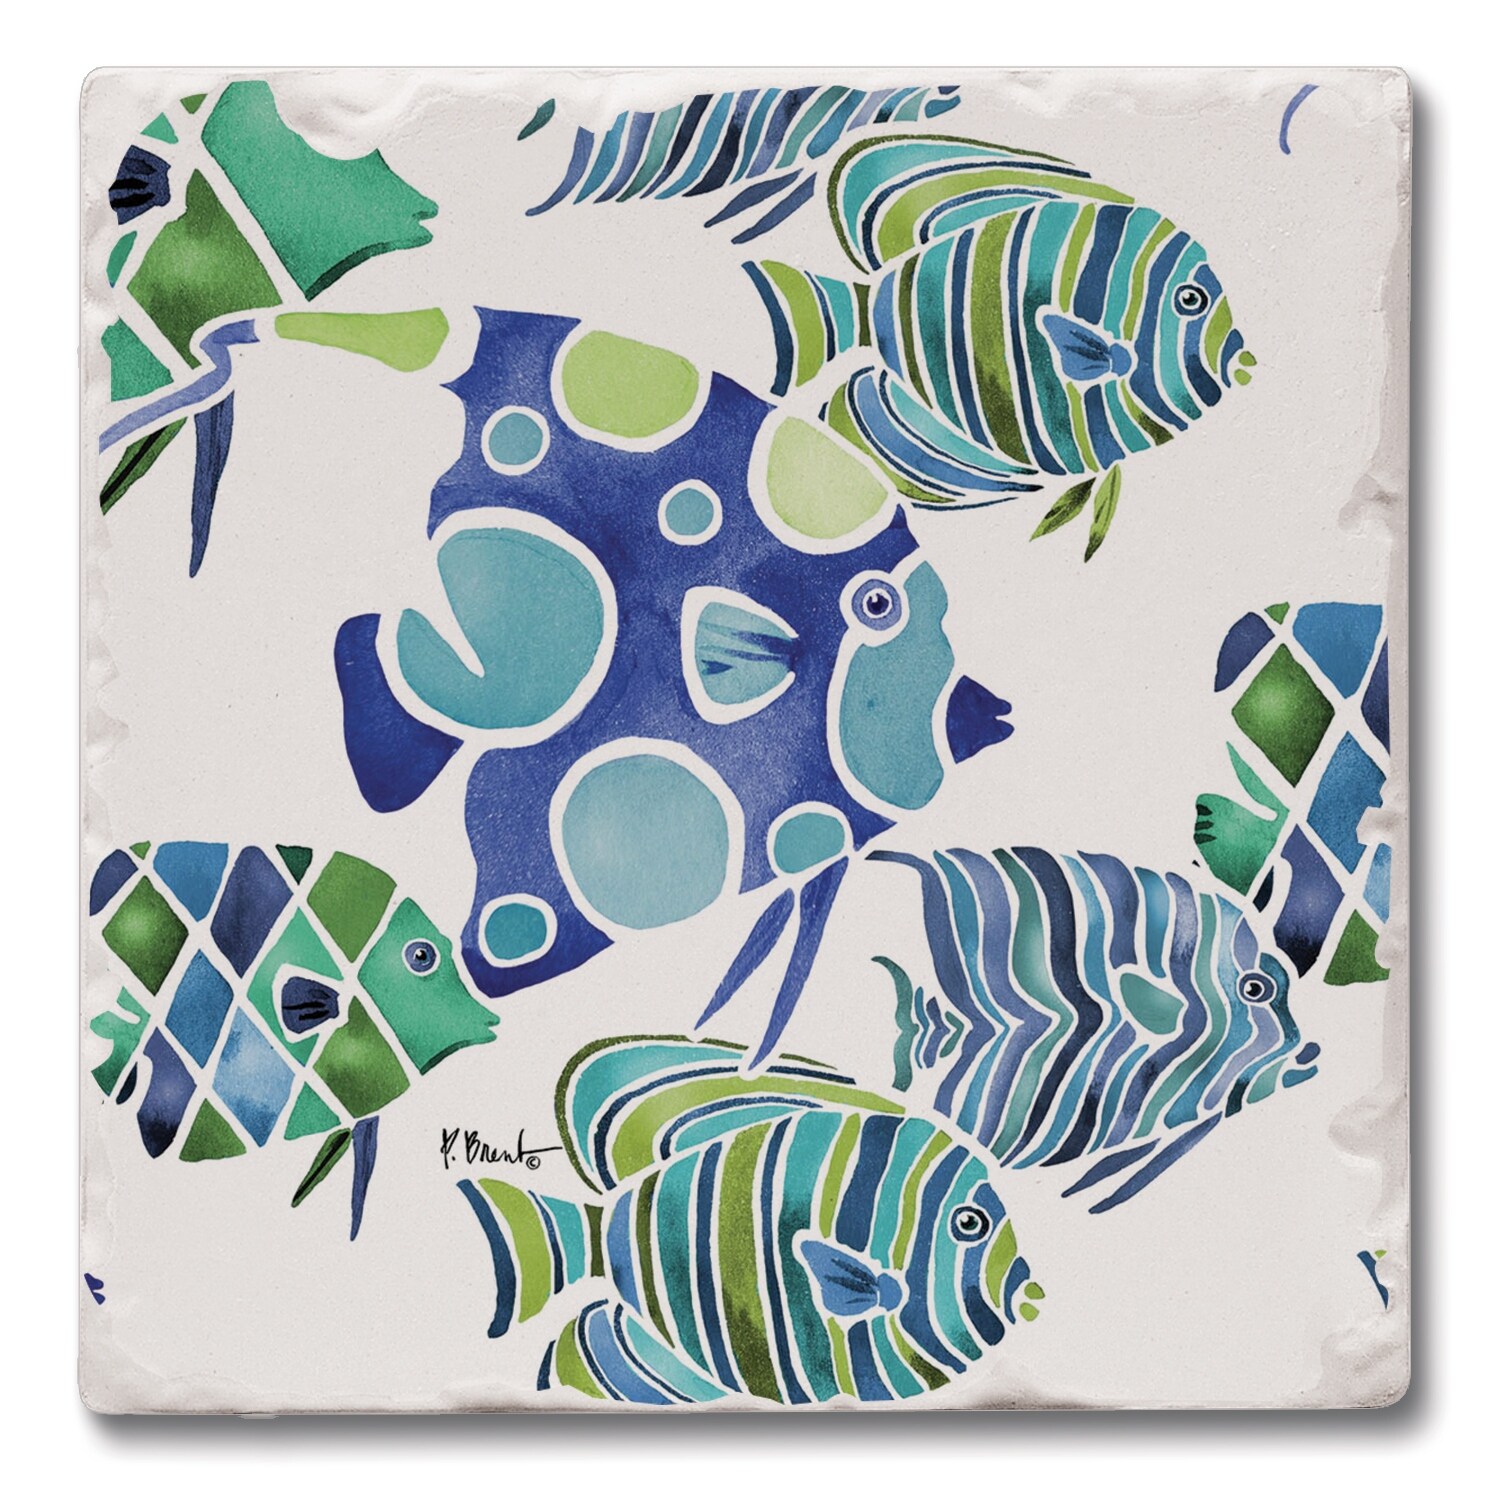 Counterart Absorbent Stone Coasters - Tahiti Blues - Set of 4 - 4x4x1.218